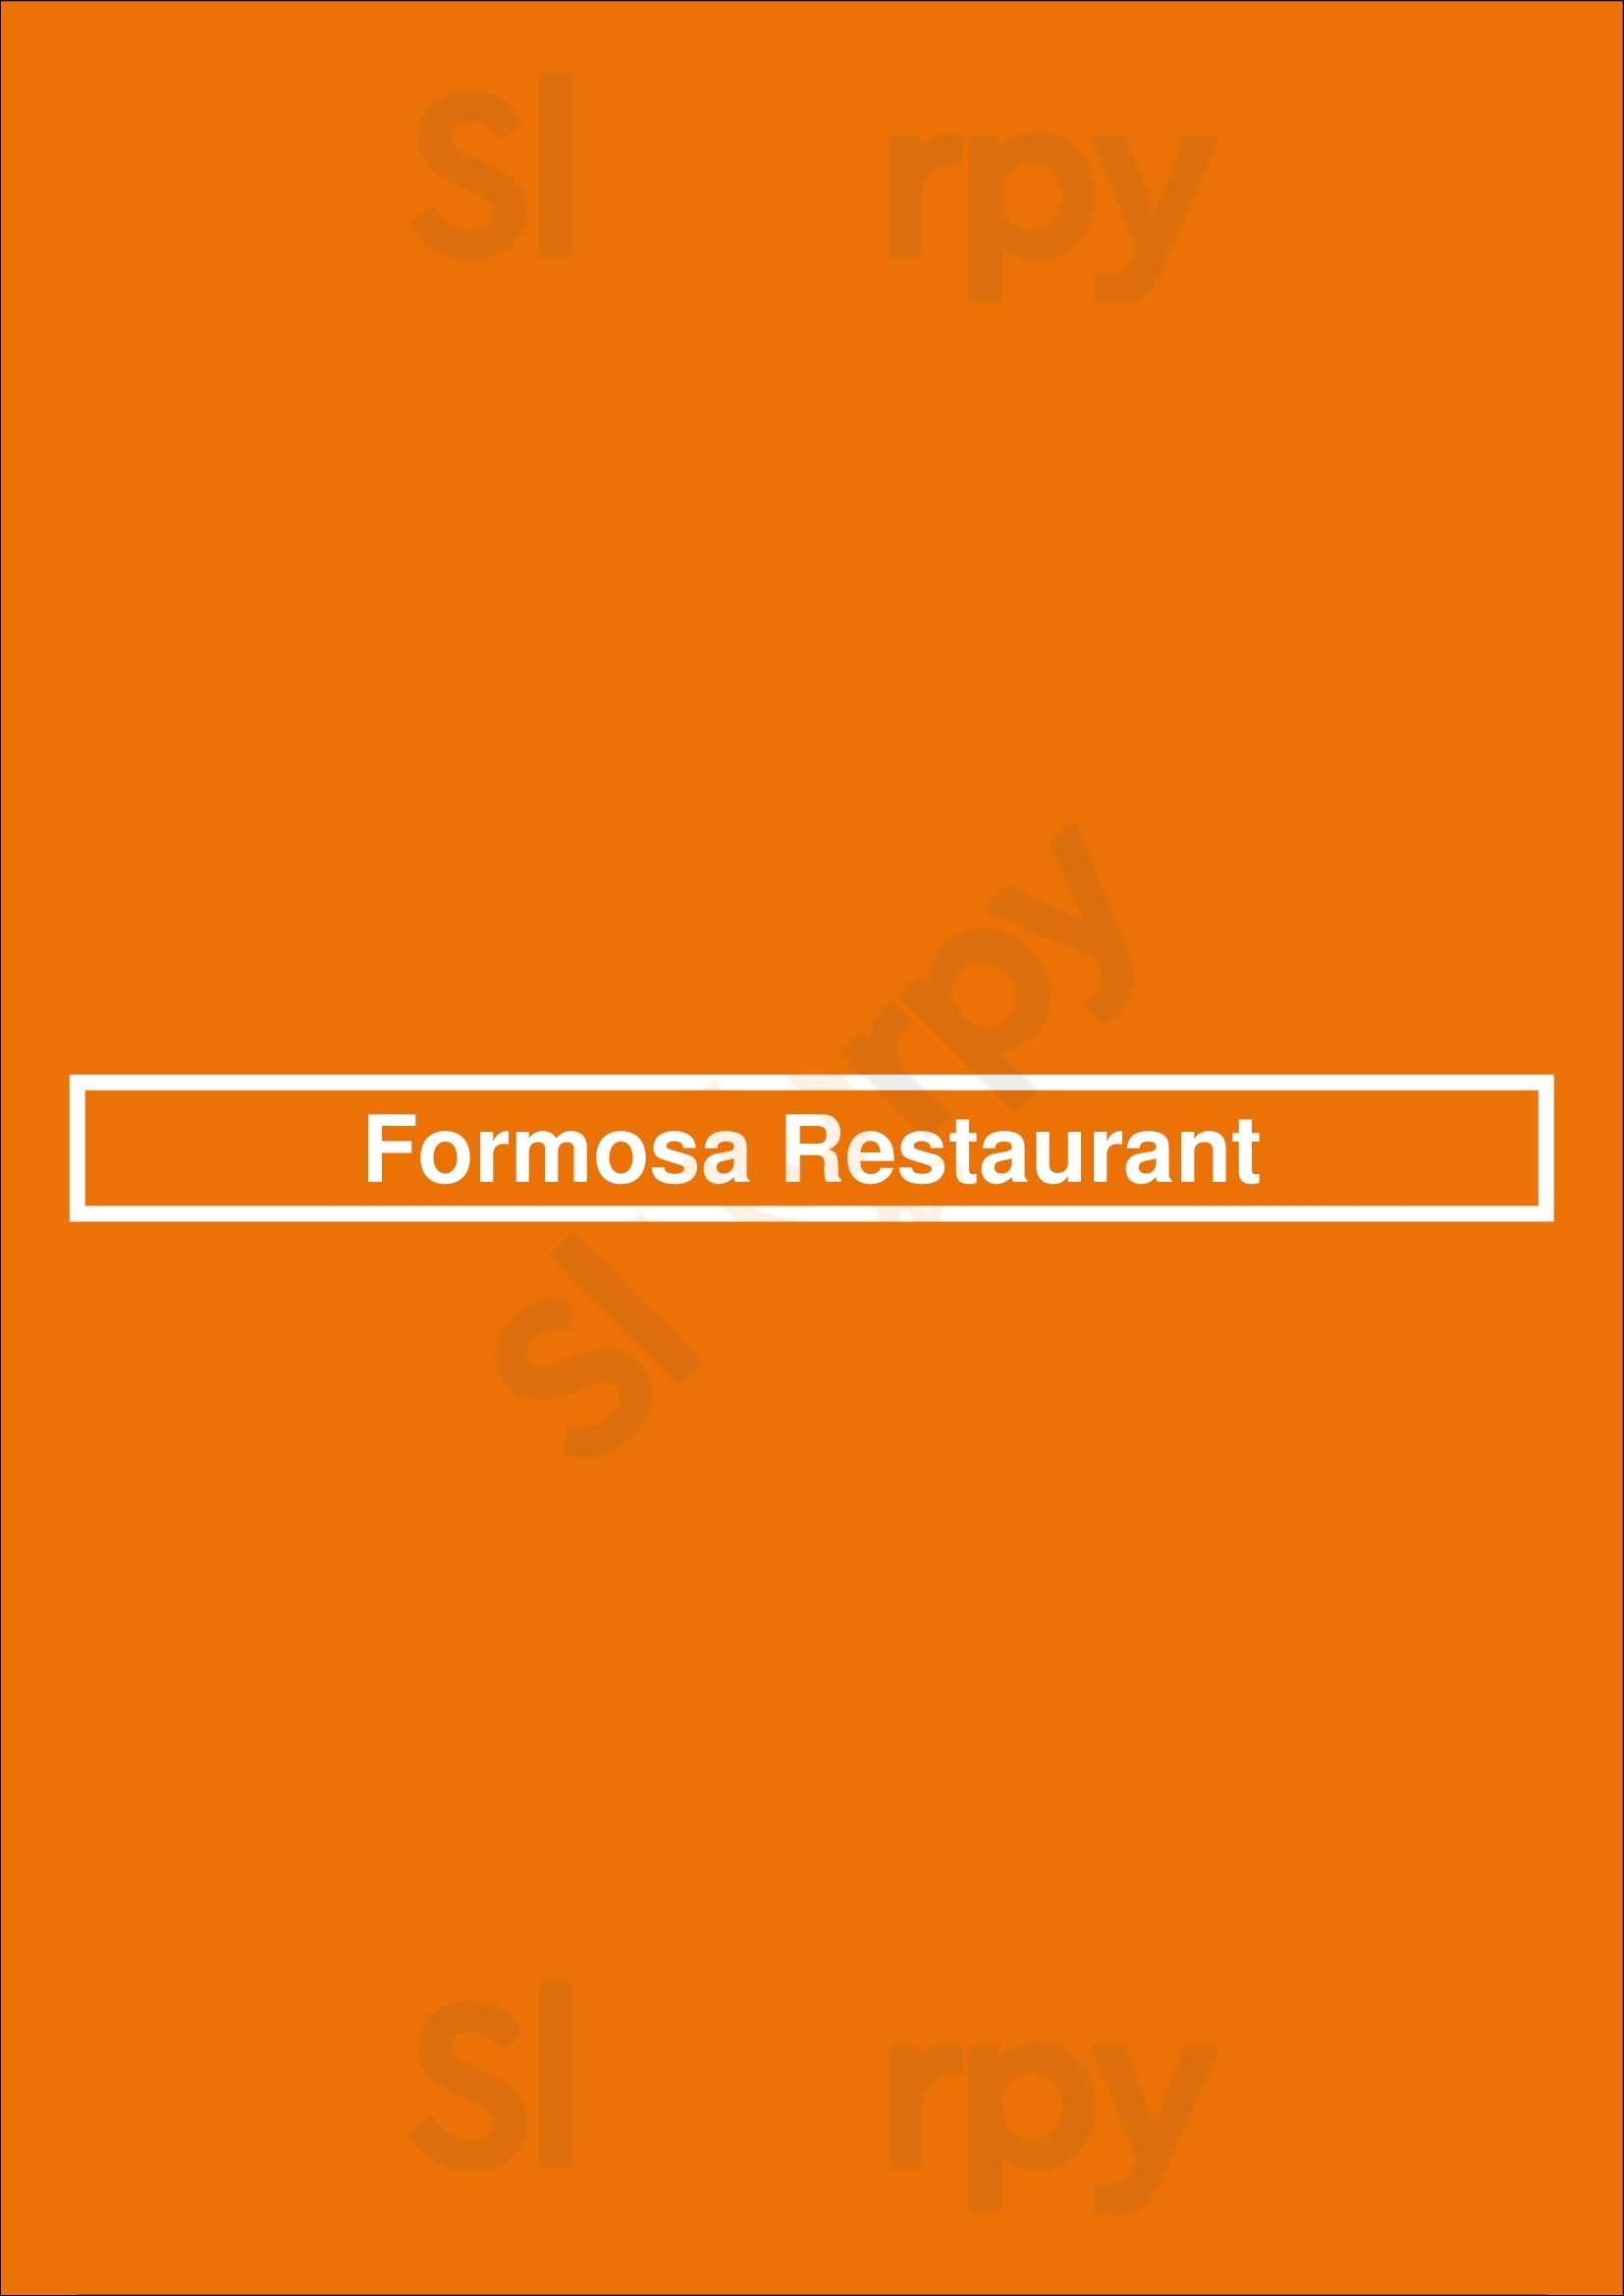 Formosa Restaurant Hixson Menu - 1